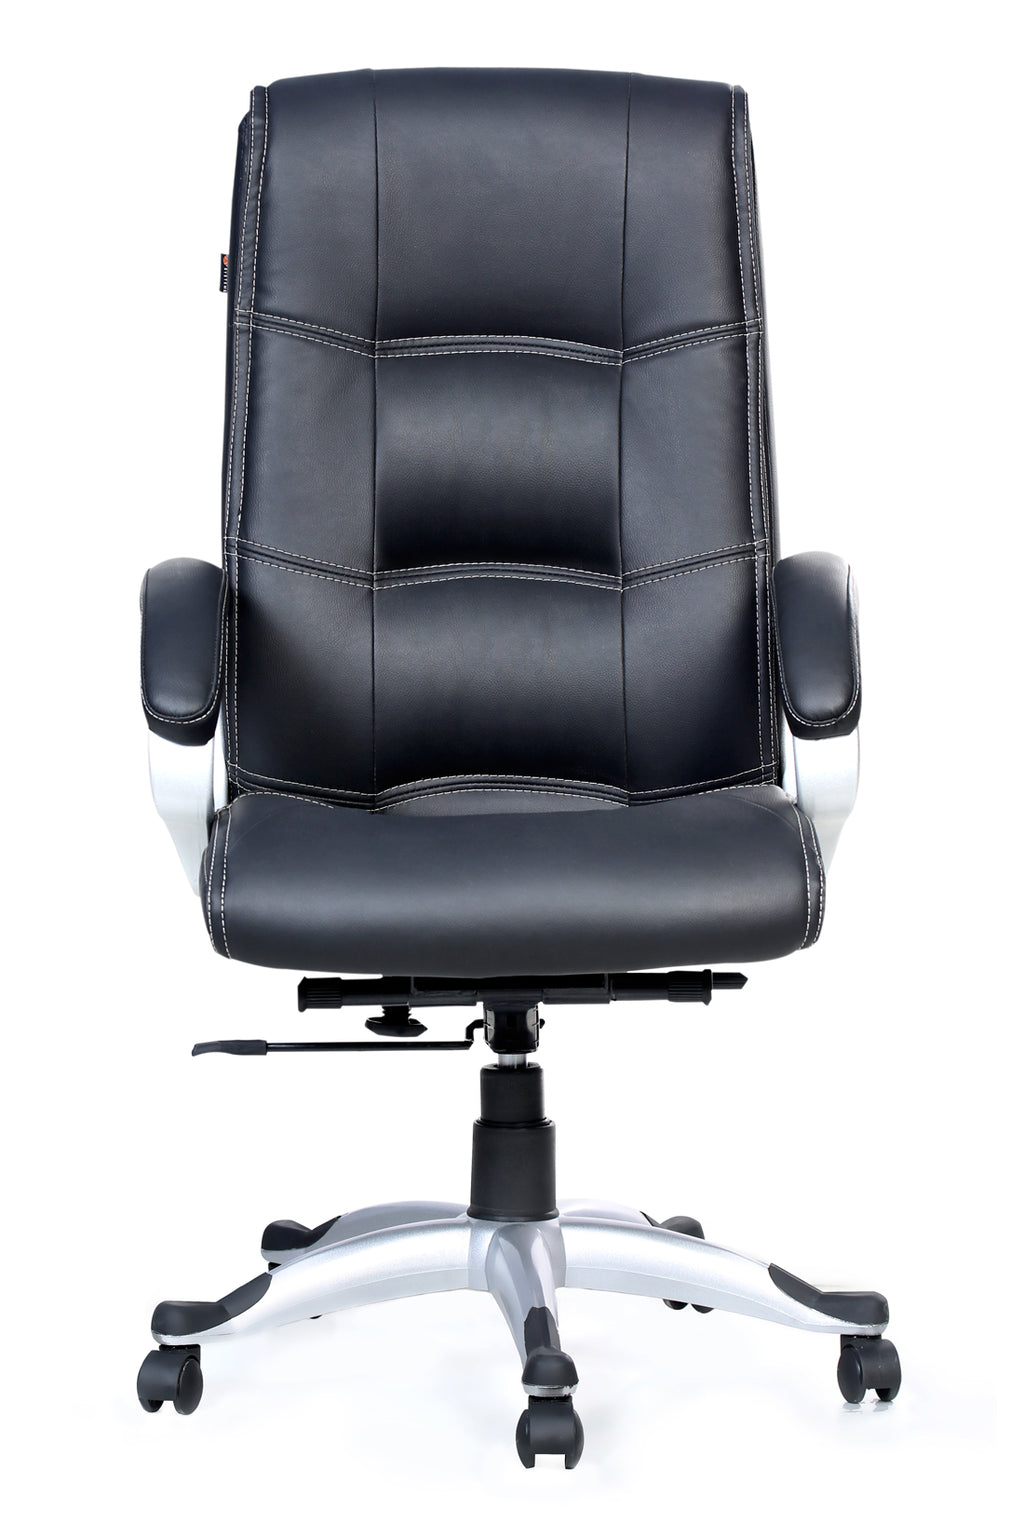 Detec™ Adiko High Back Office Chair - Black Color